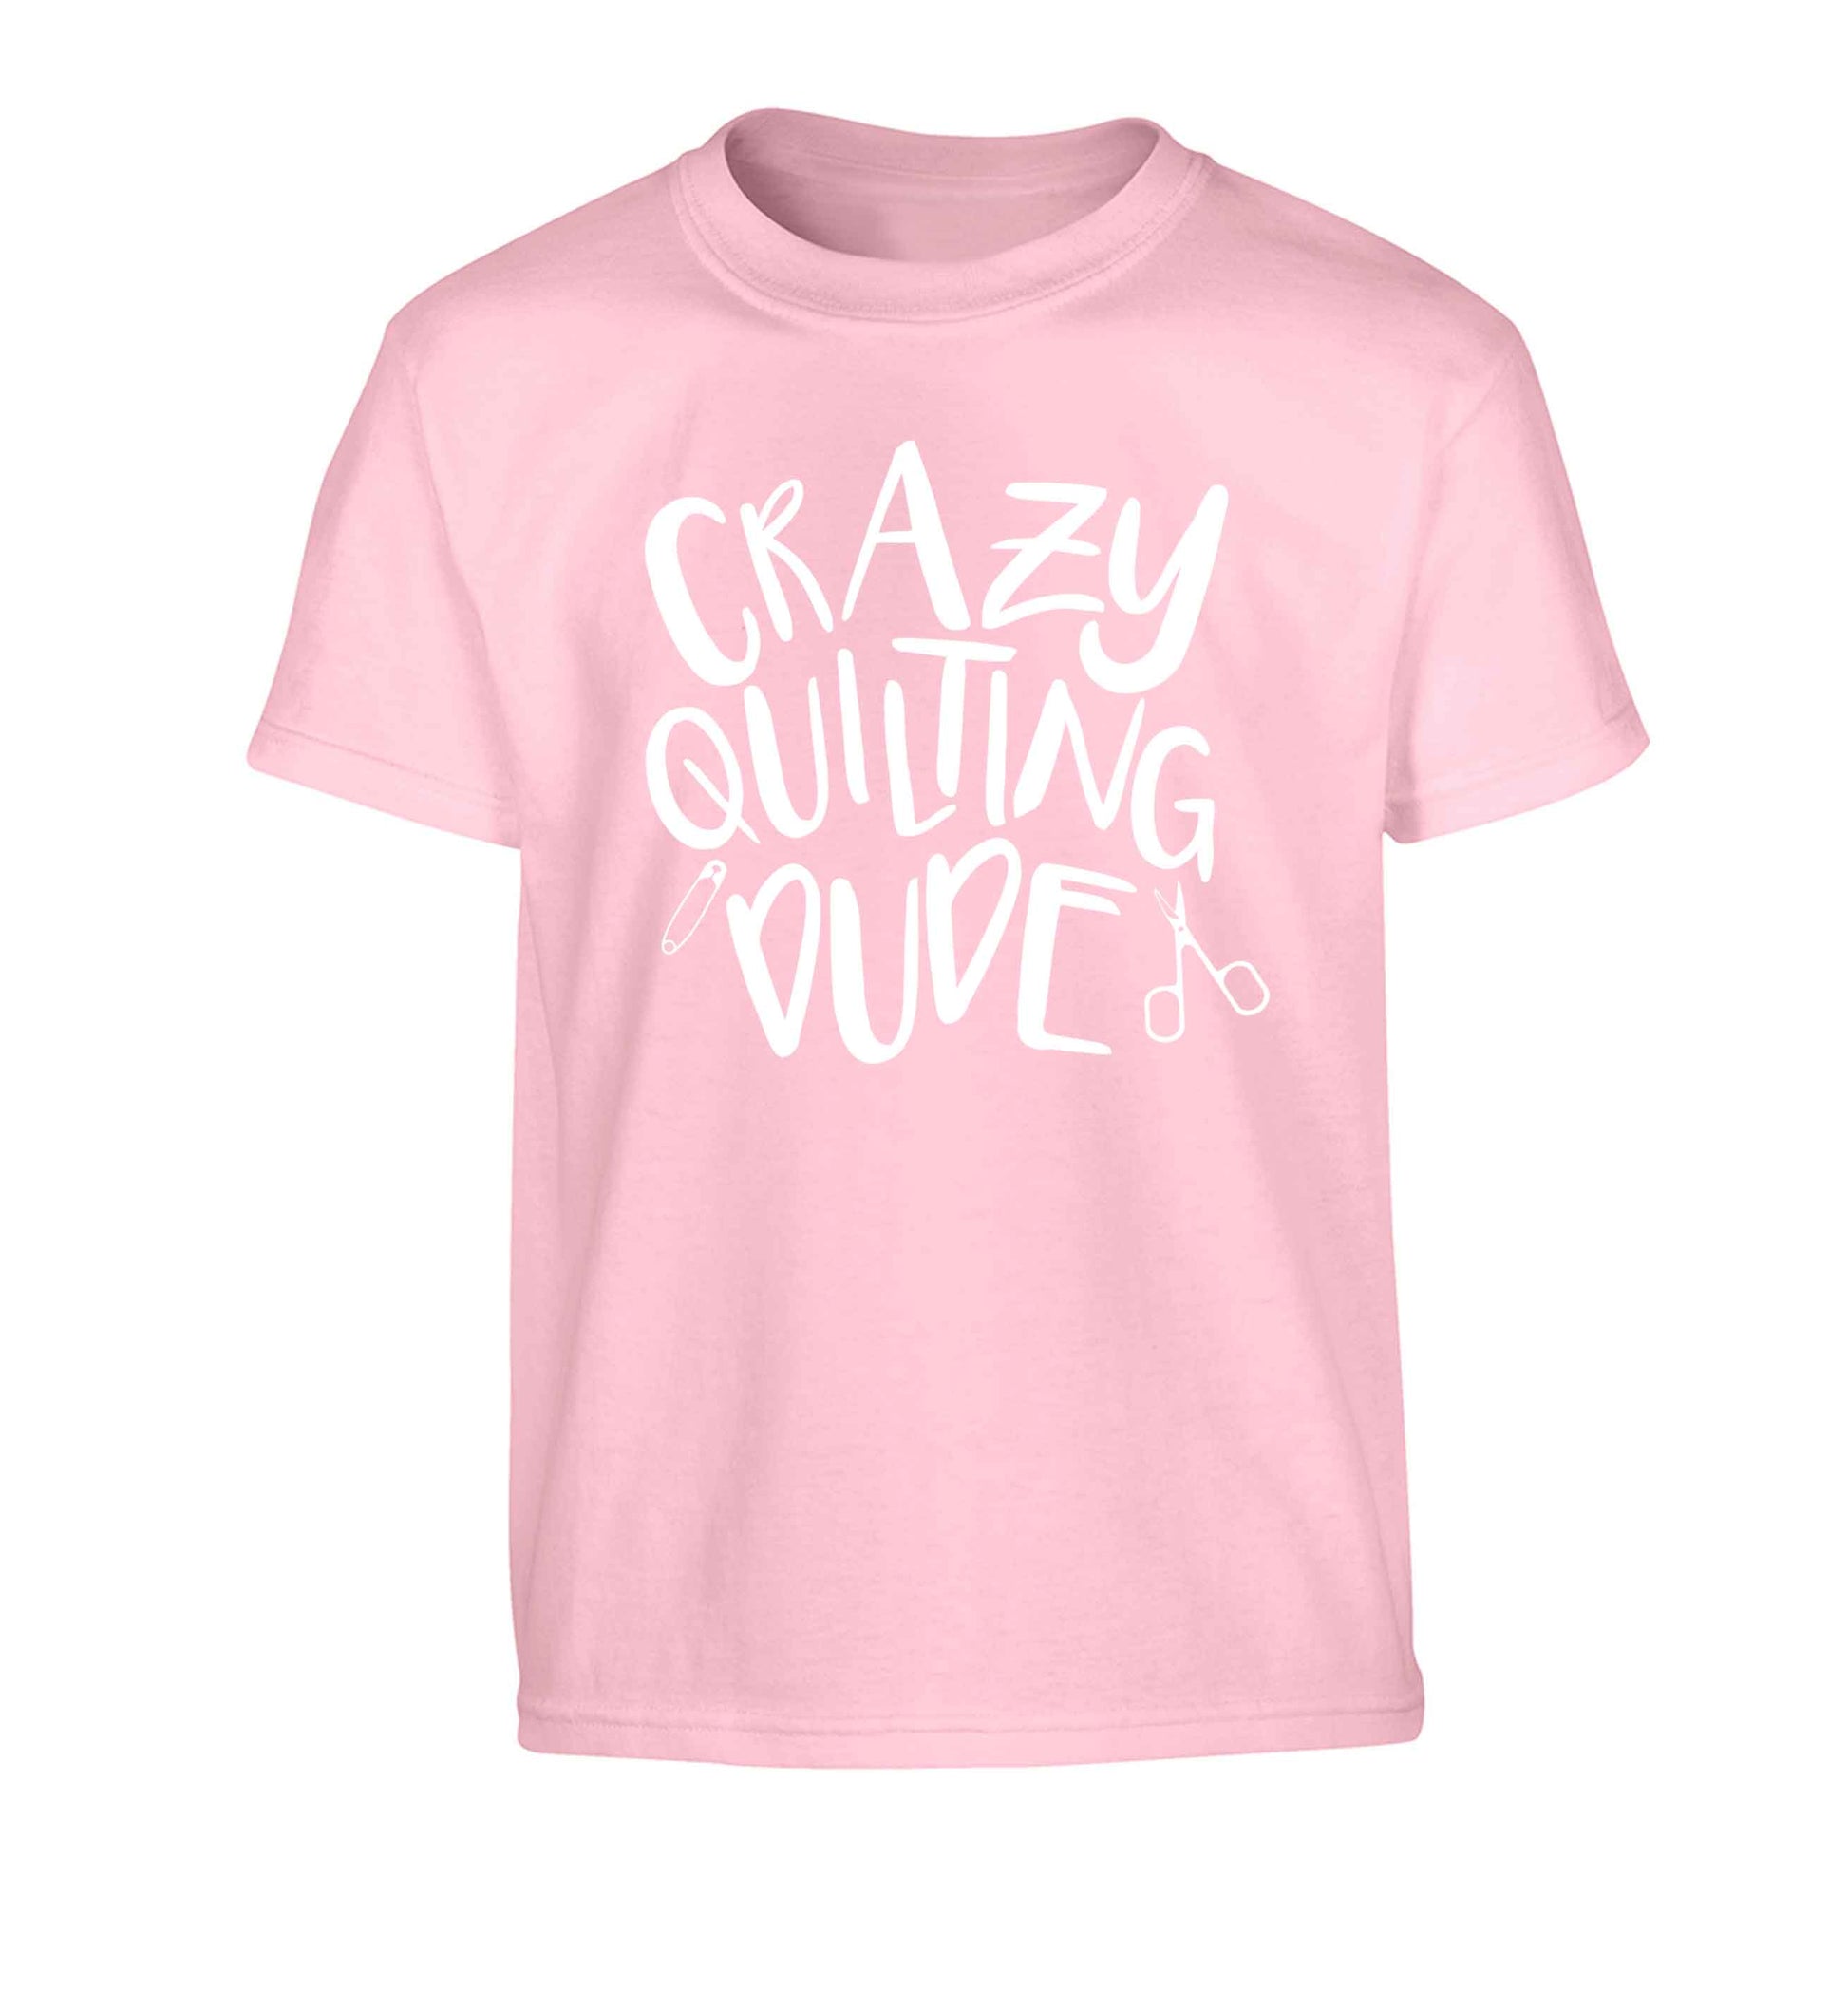 Crazy quilting dude Children's light pink Tshirt 12-13 Years